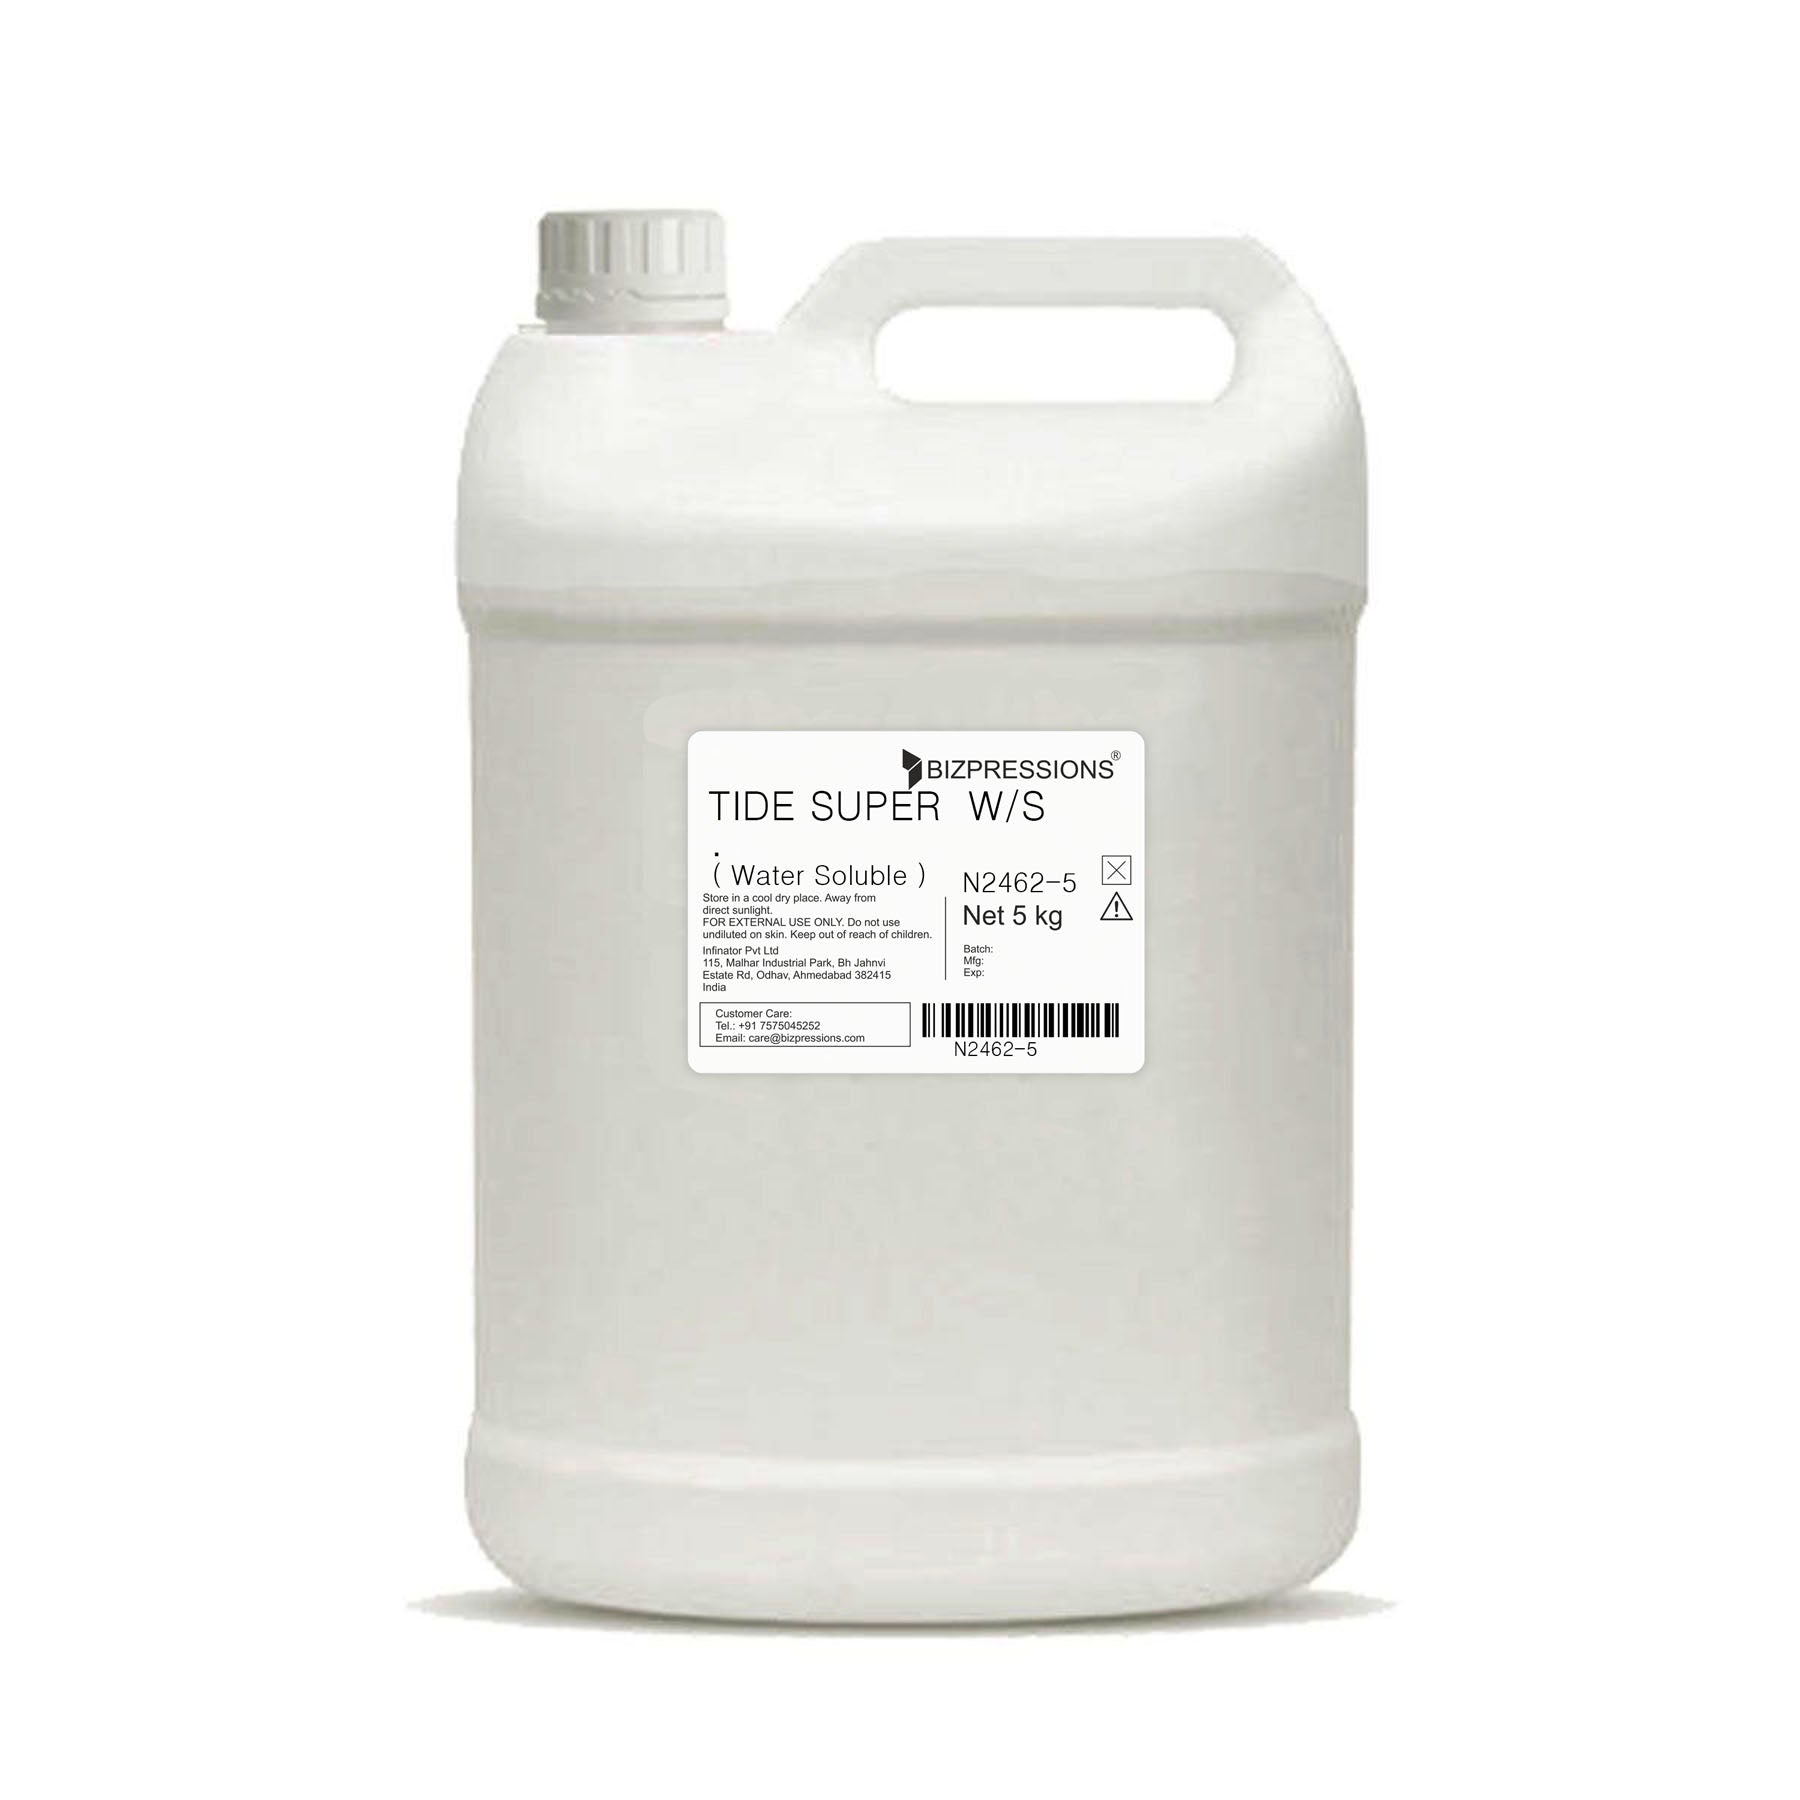 TIDE SUPER W/S - Fragrance ( Water Soluble ) - 5 kg